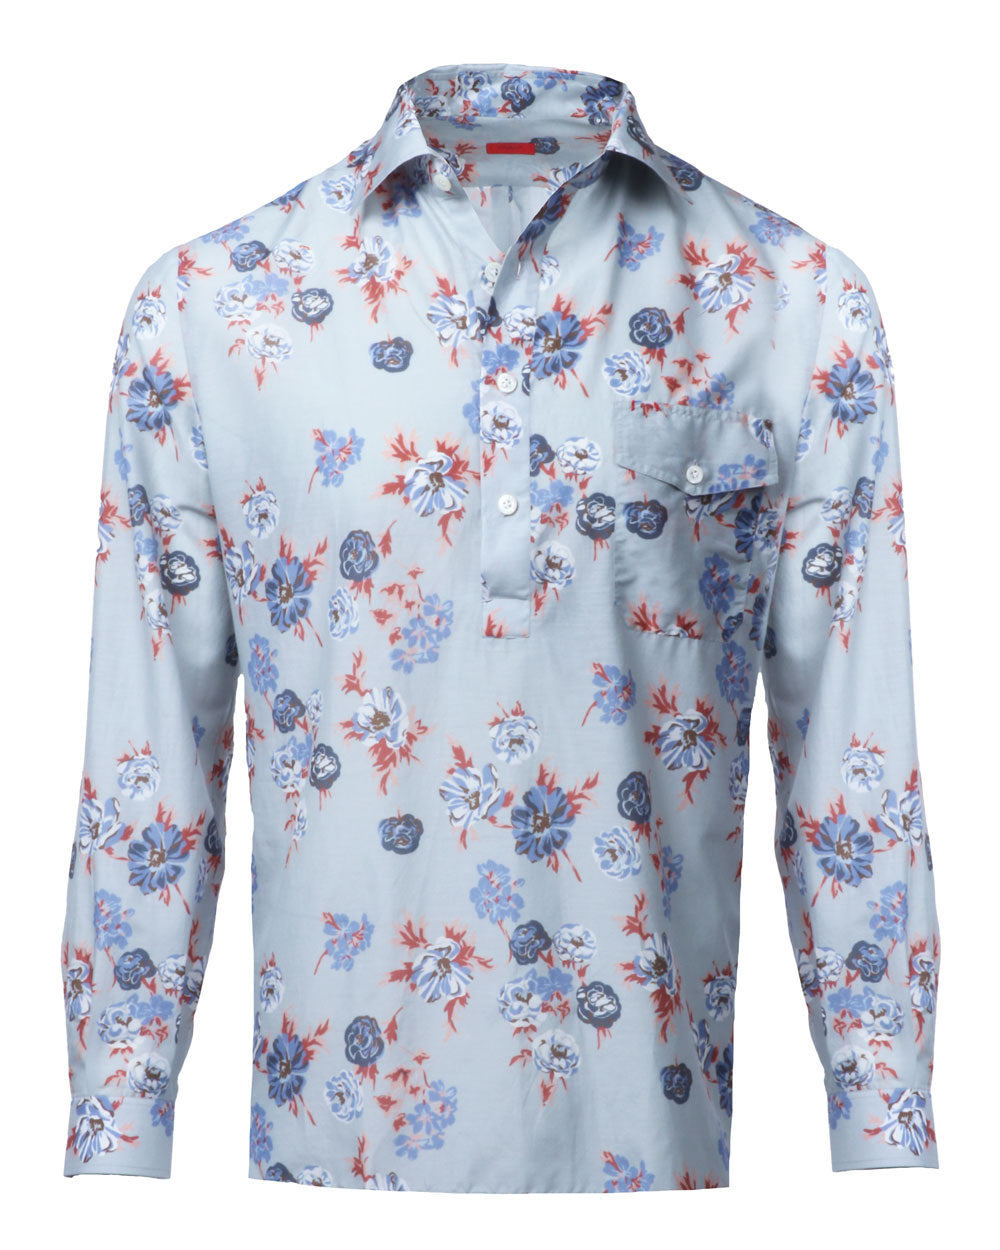 Floral Print Popover Dress Shirt